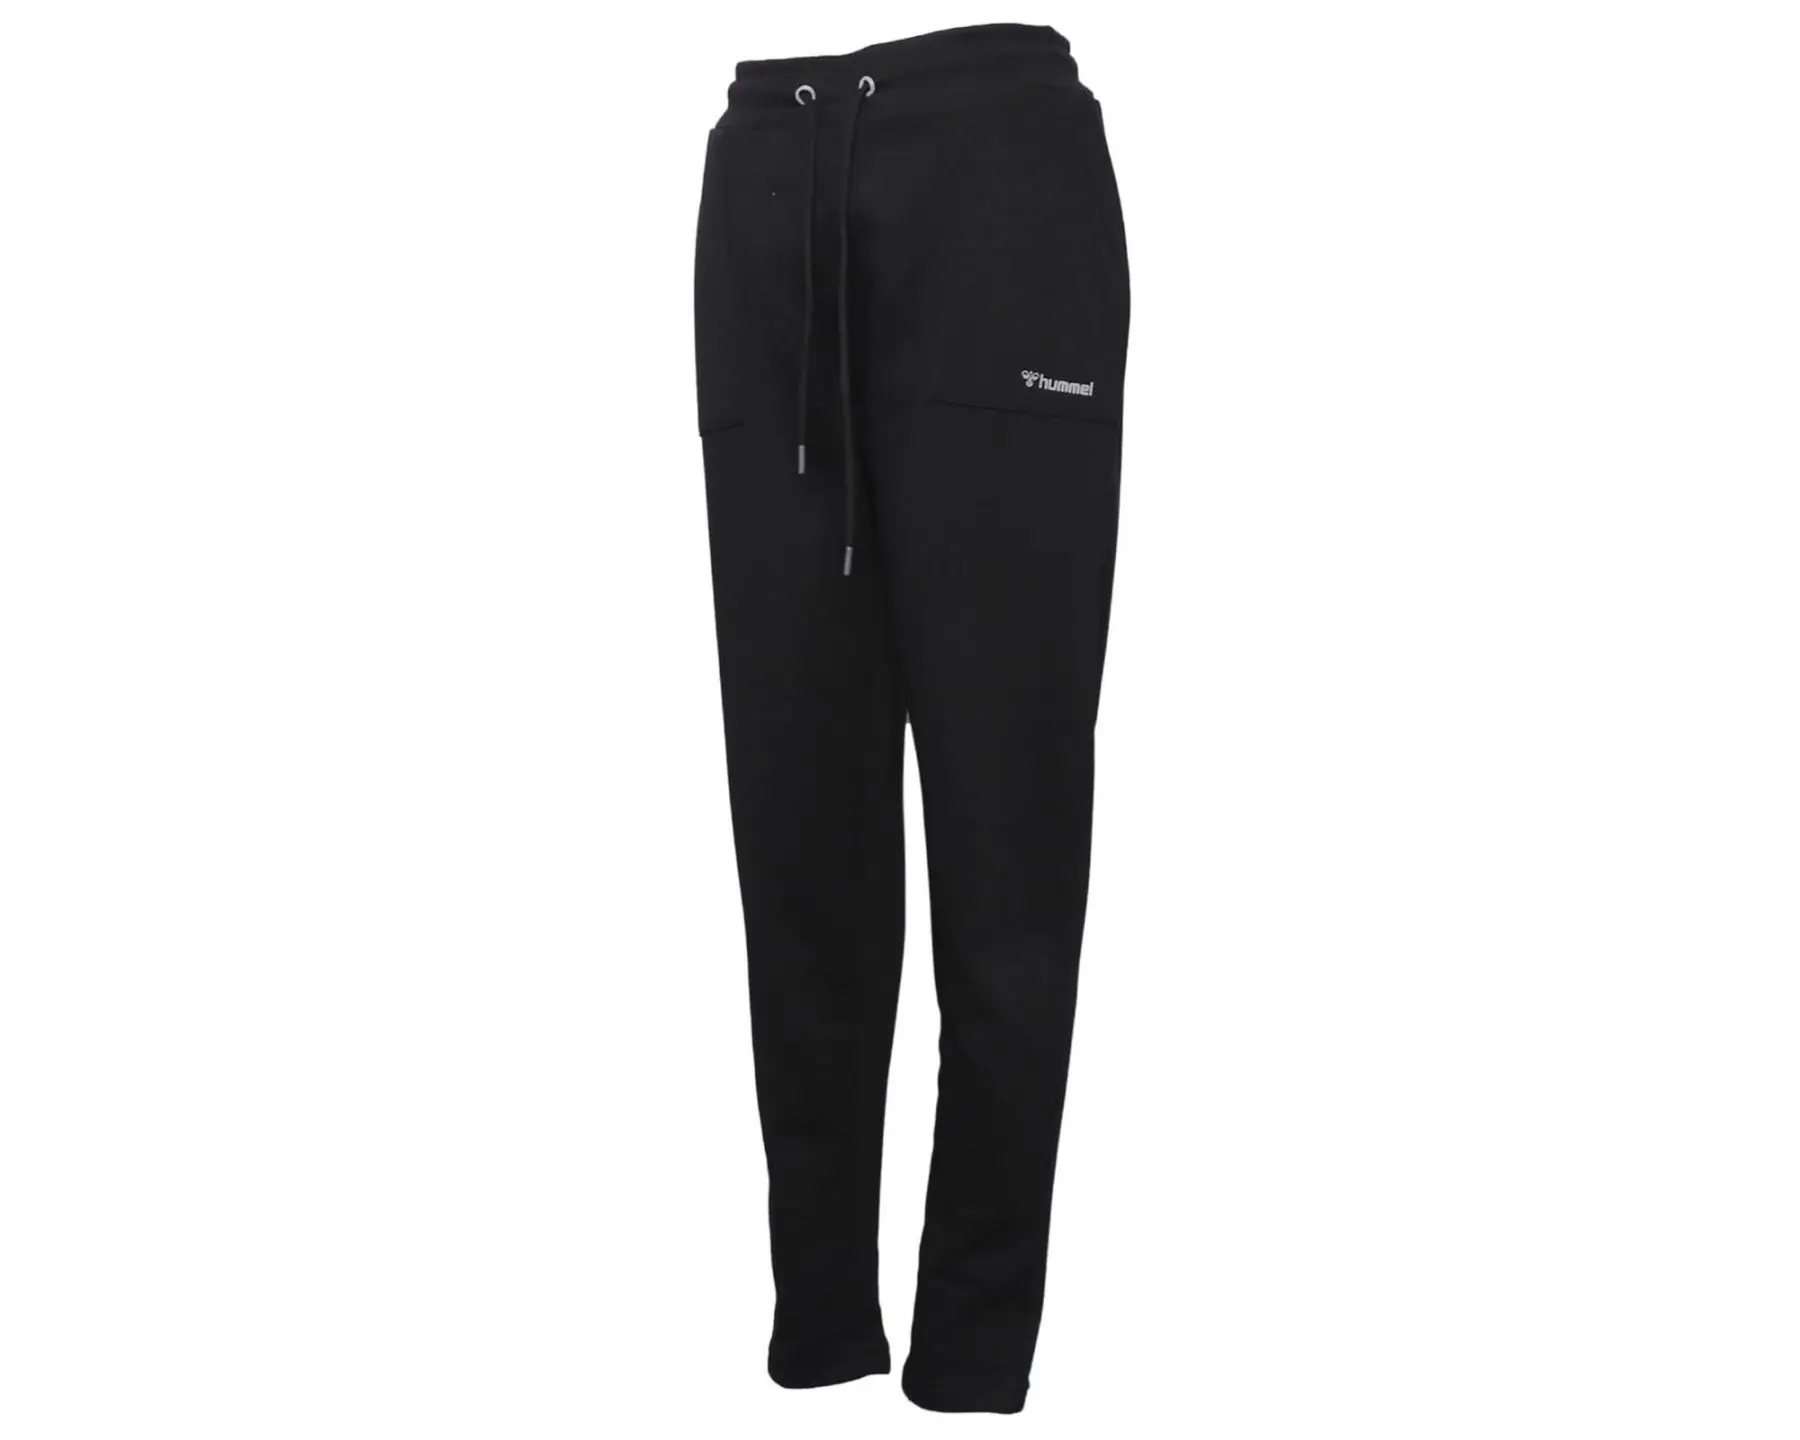 Hummel Original men's Casual Sweatpants Black Color Gym Training Joggers Running Pant Pants